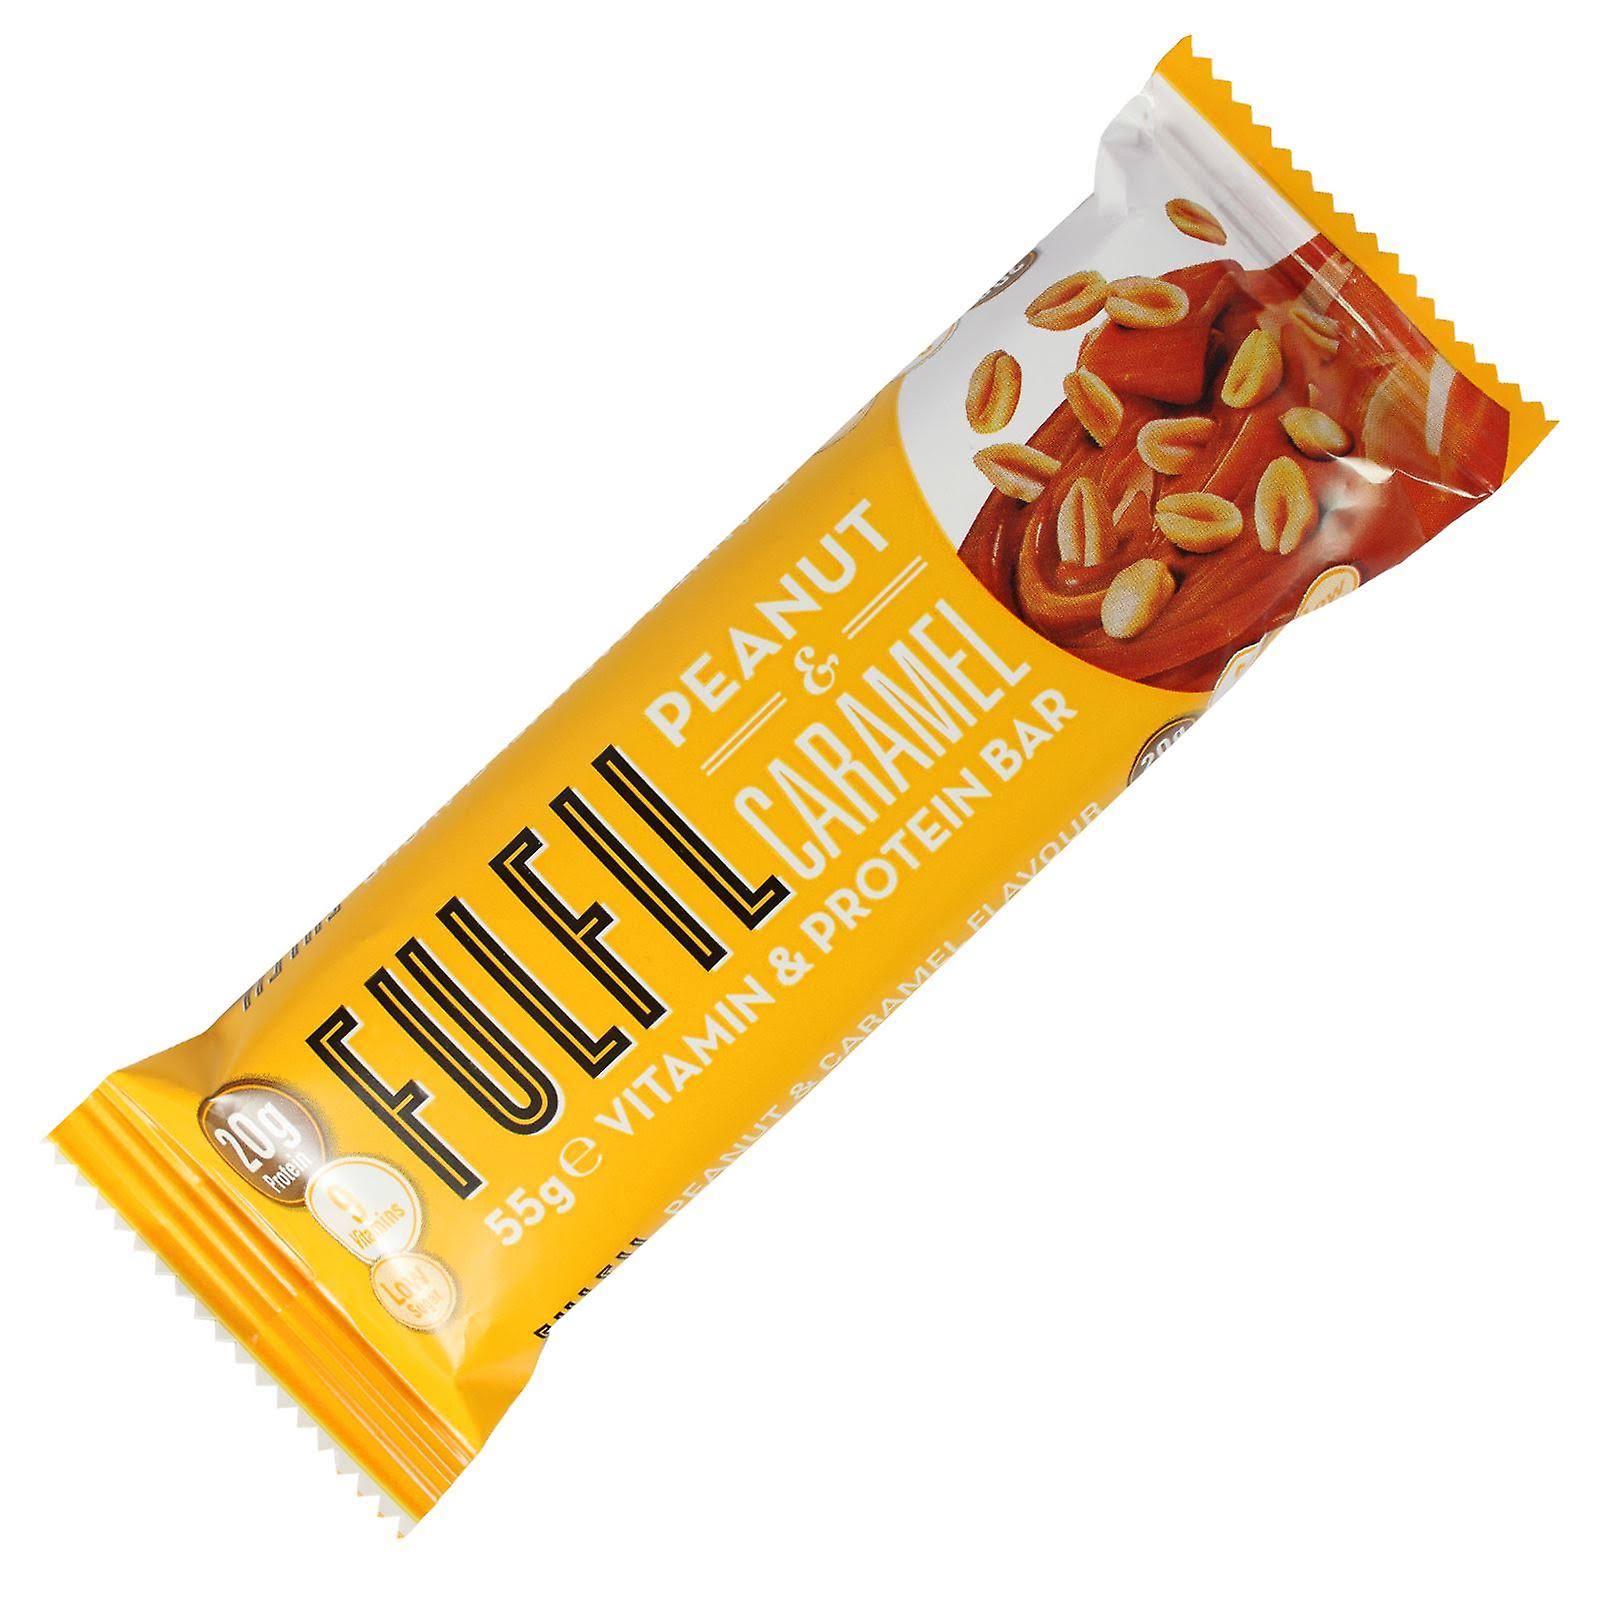 Fulfil - Peanut & Caramel Vitamin & Protein Bar 55g